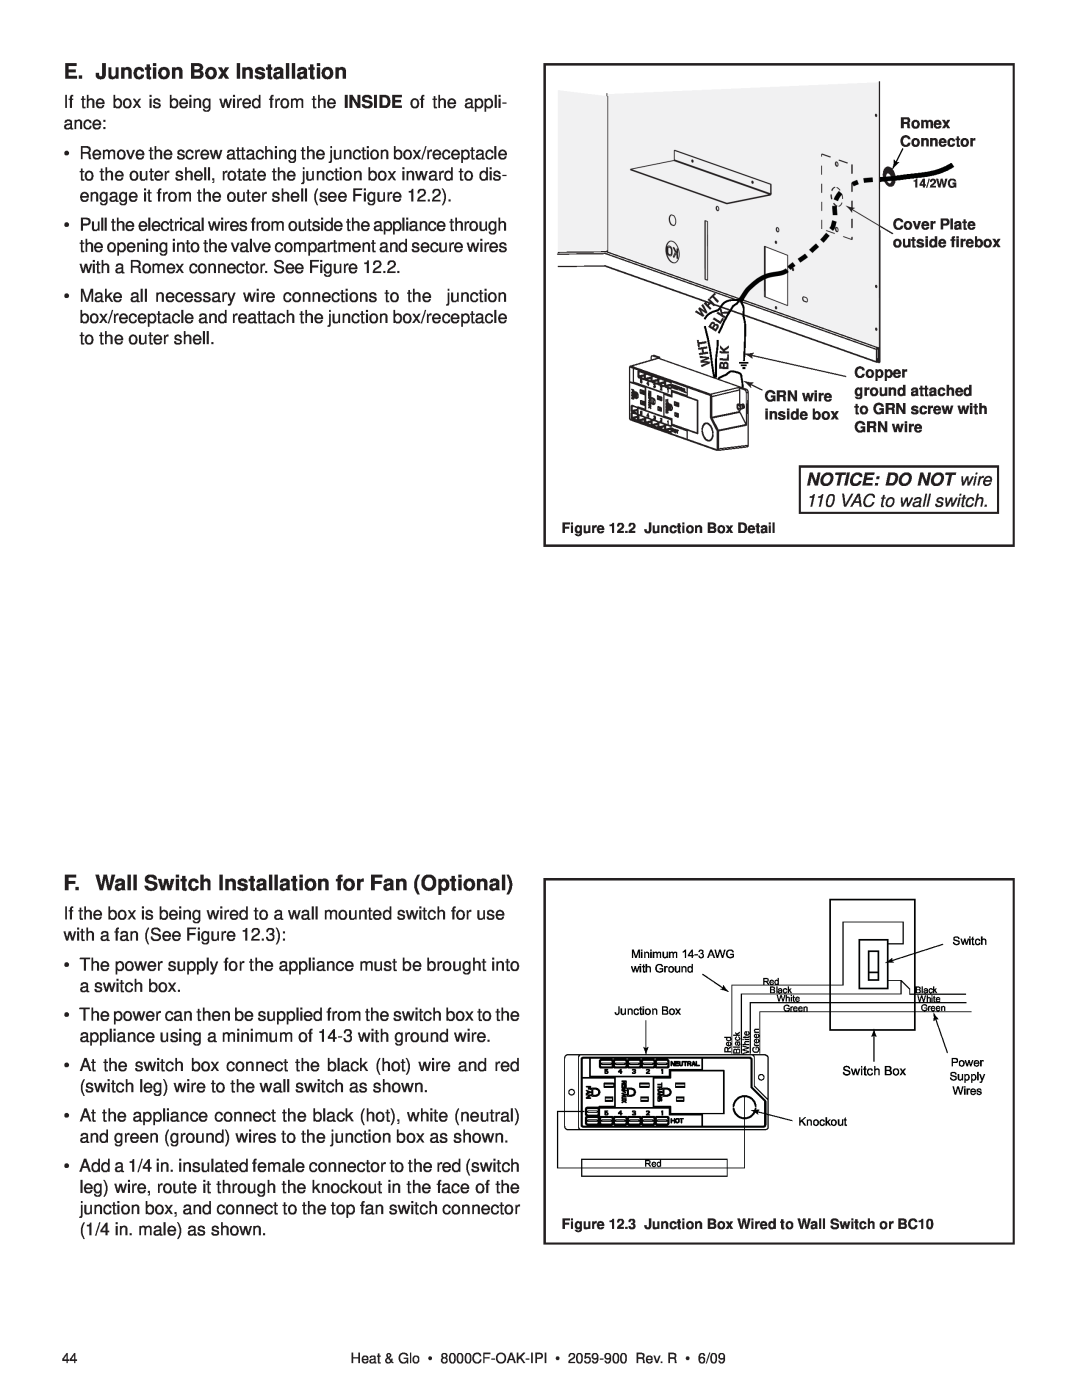 Heat & Glo LifeStyle 8000CFLP-OAKIPI E. Junction Box Installation, F. Wall Switch Installation for Fan Optional 